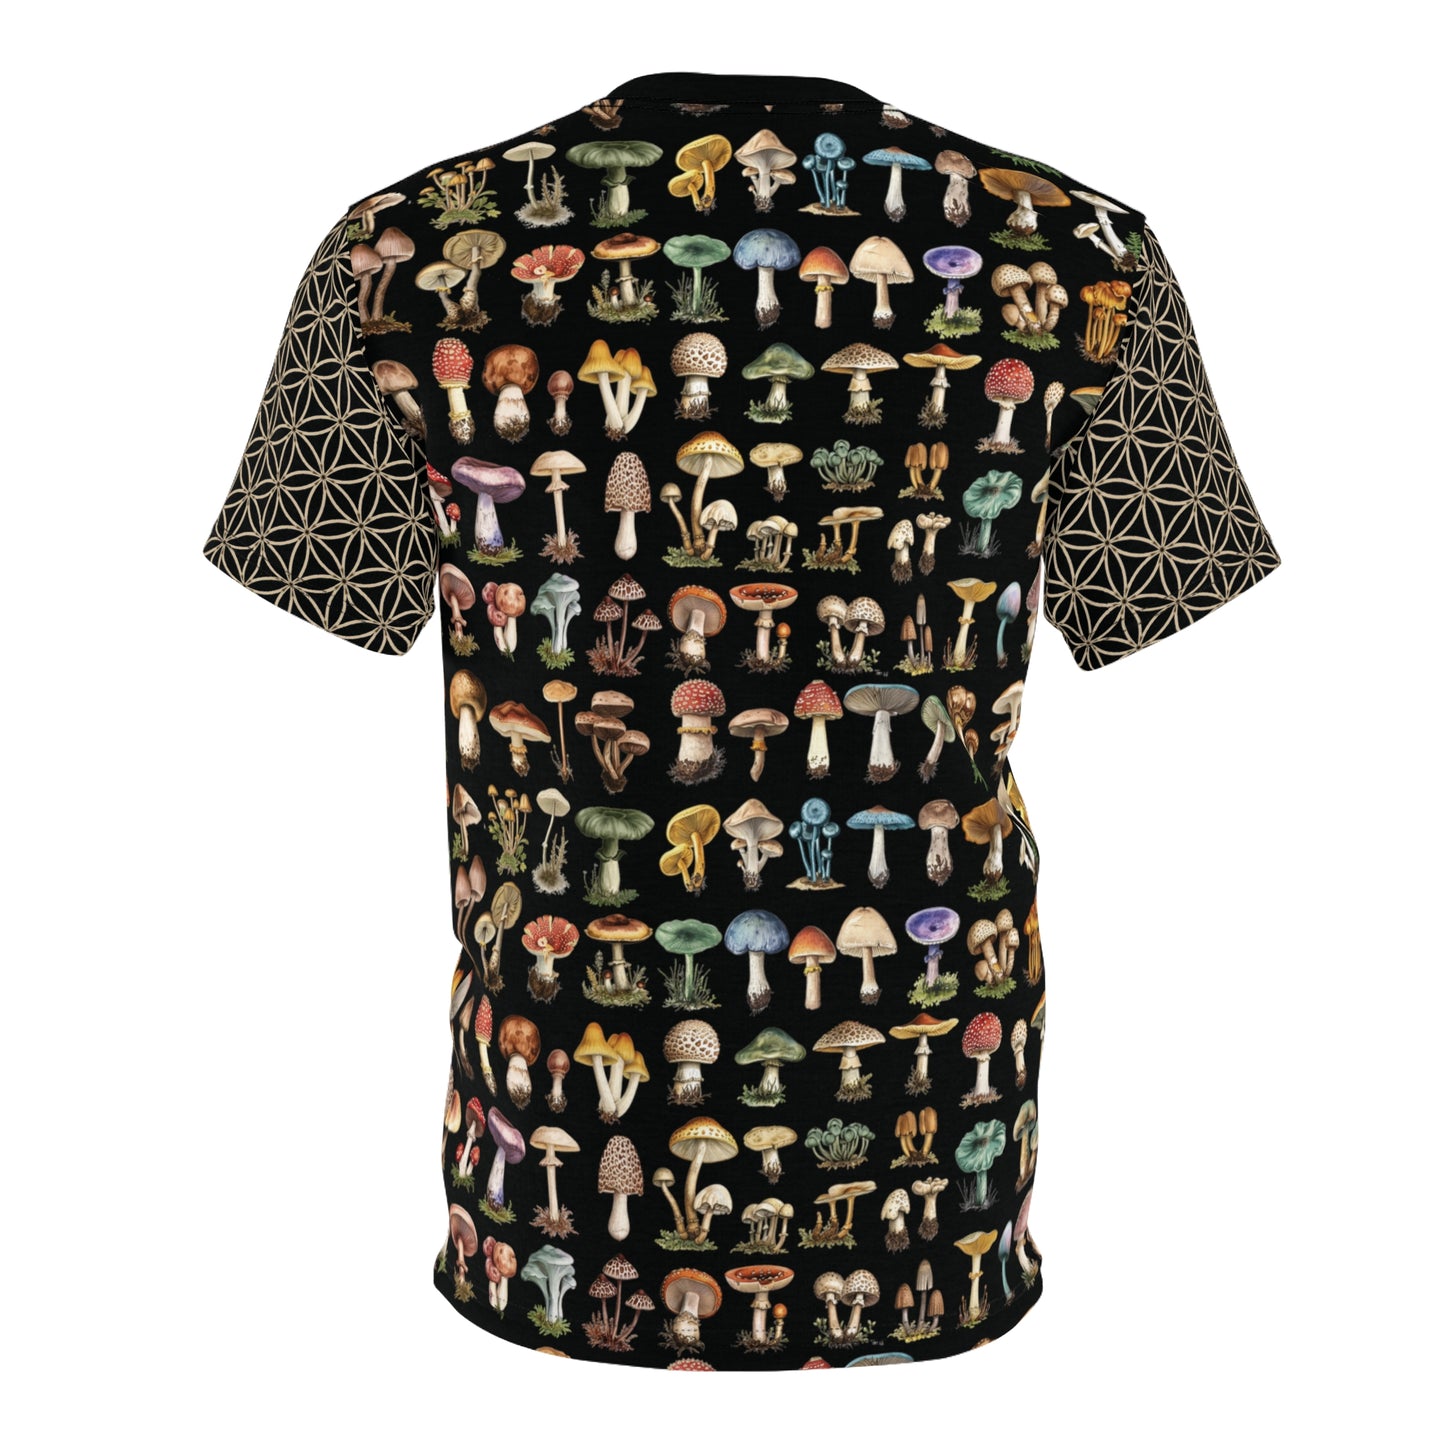 Mushroom Shirt, Vintage Mushroom T-shirt, Festival Outfit